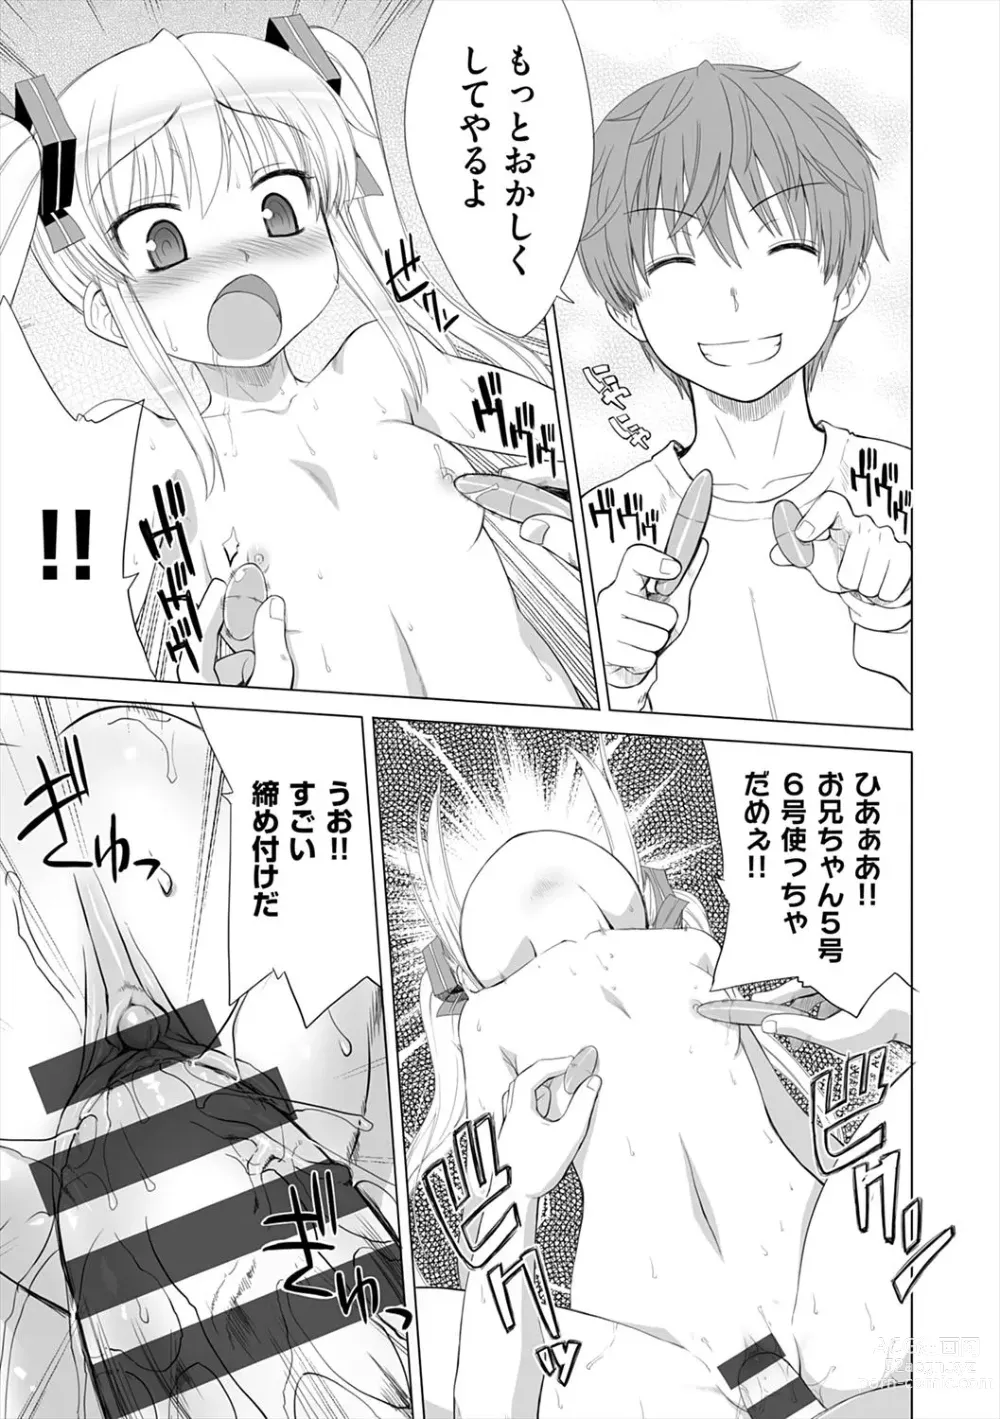 Page 197 of manga Marble Girls